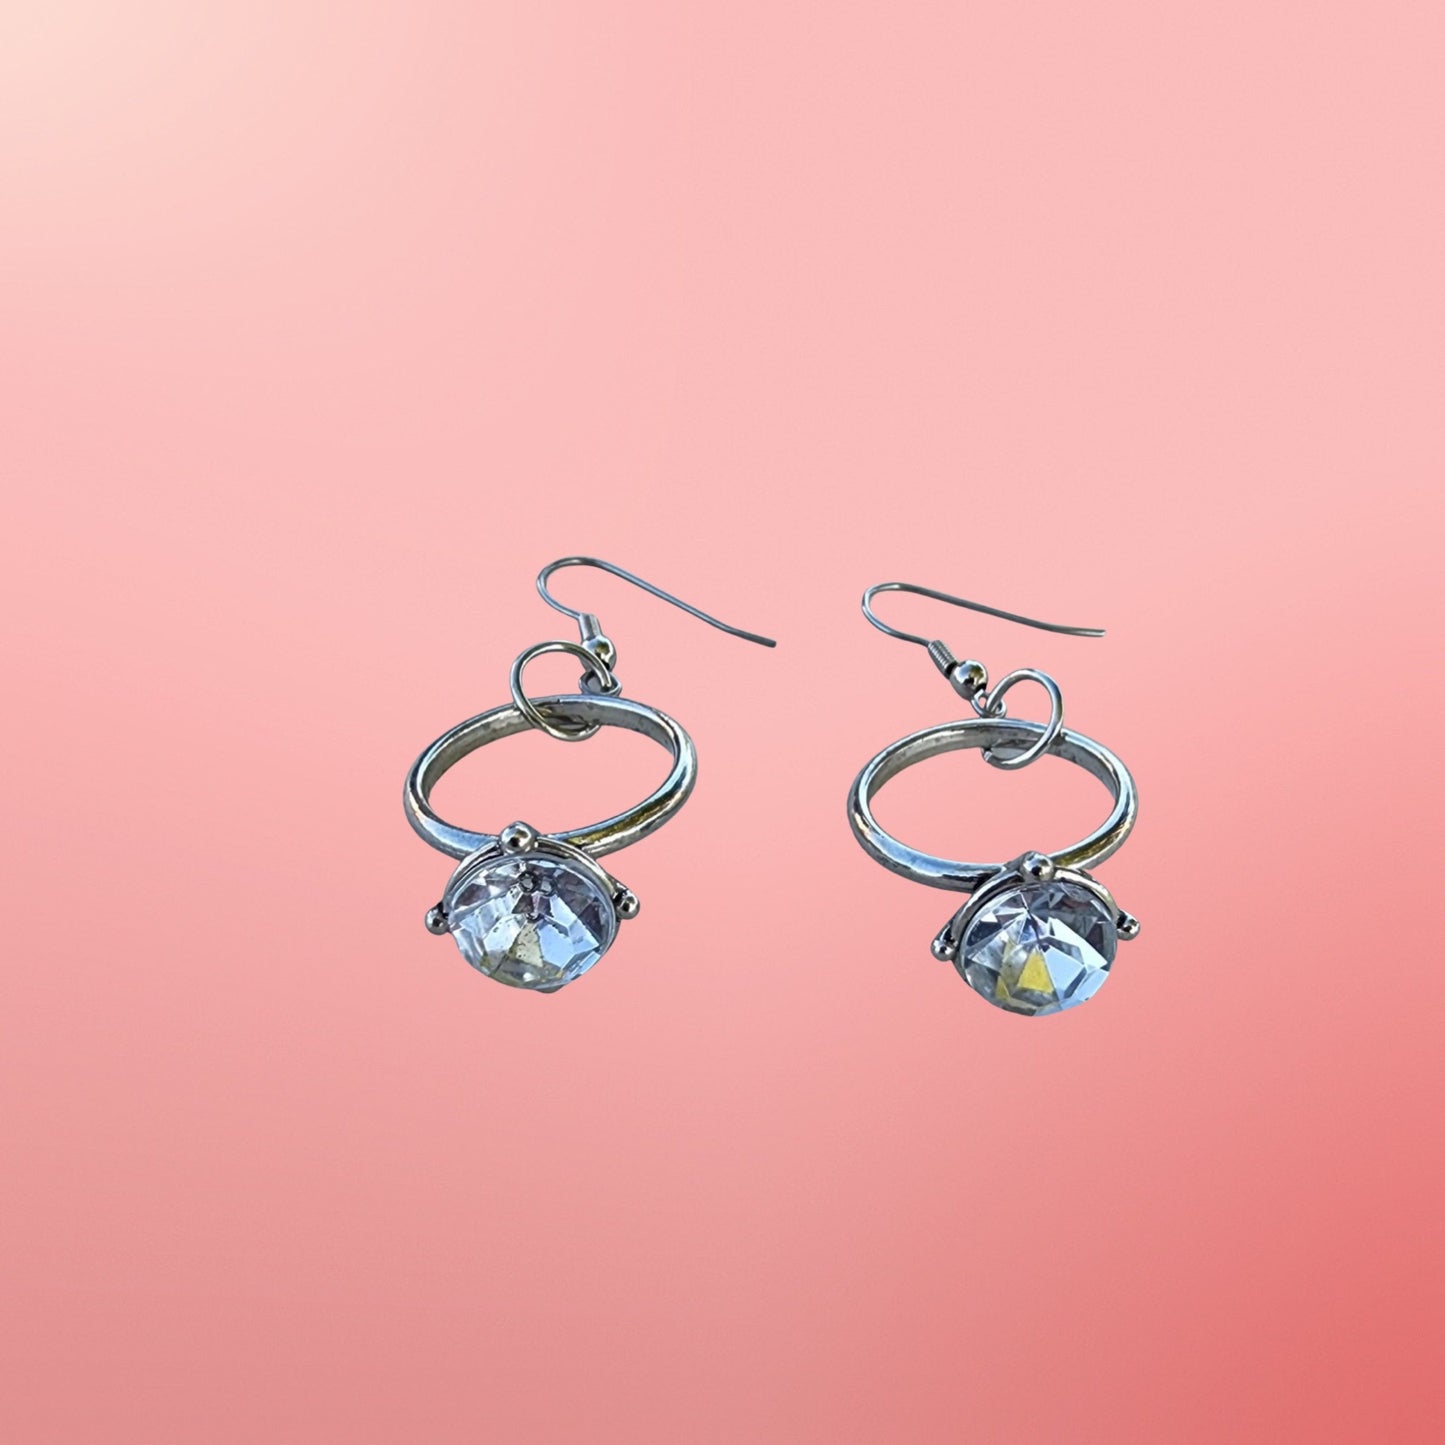 Diamond Ring Earrings